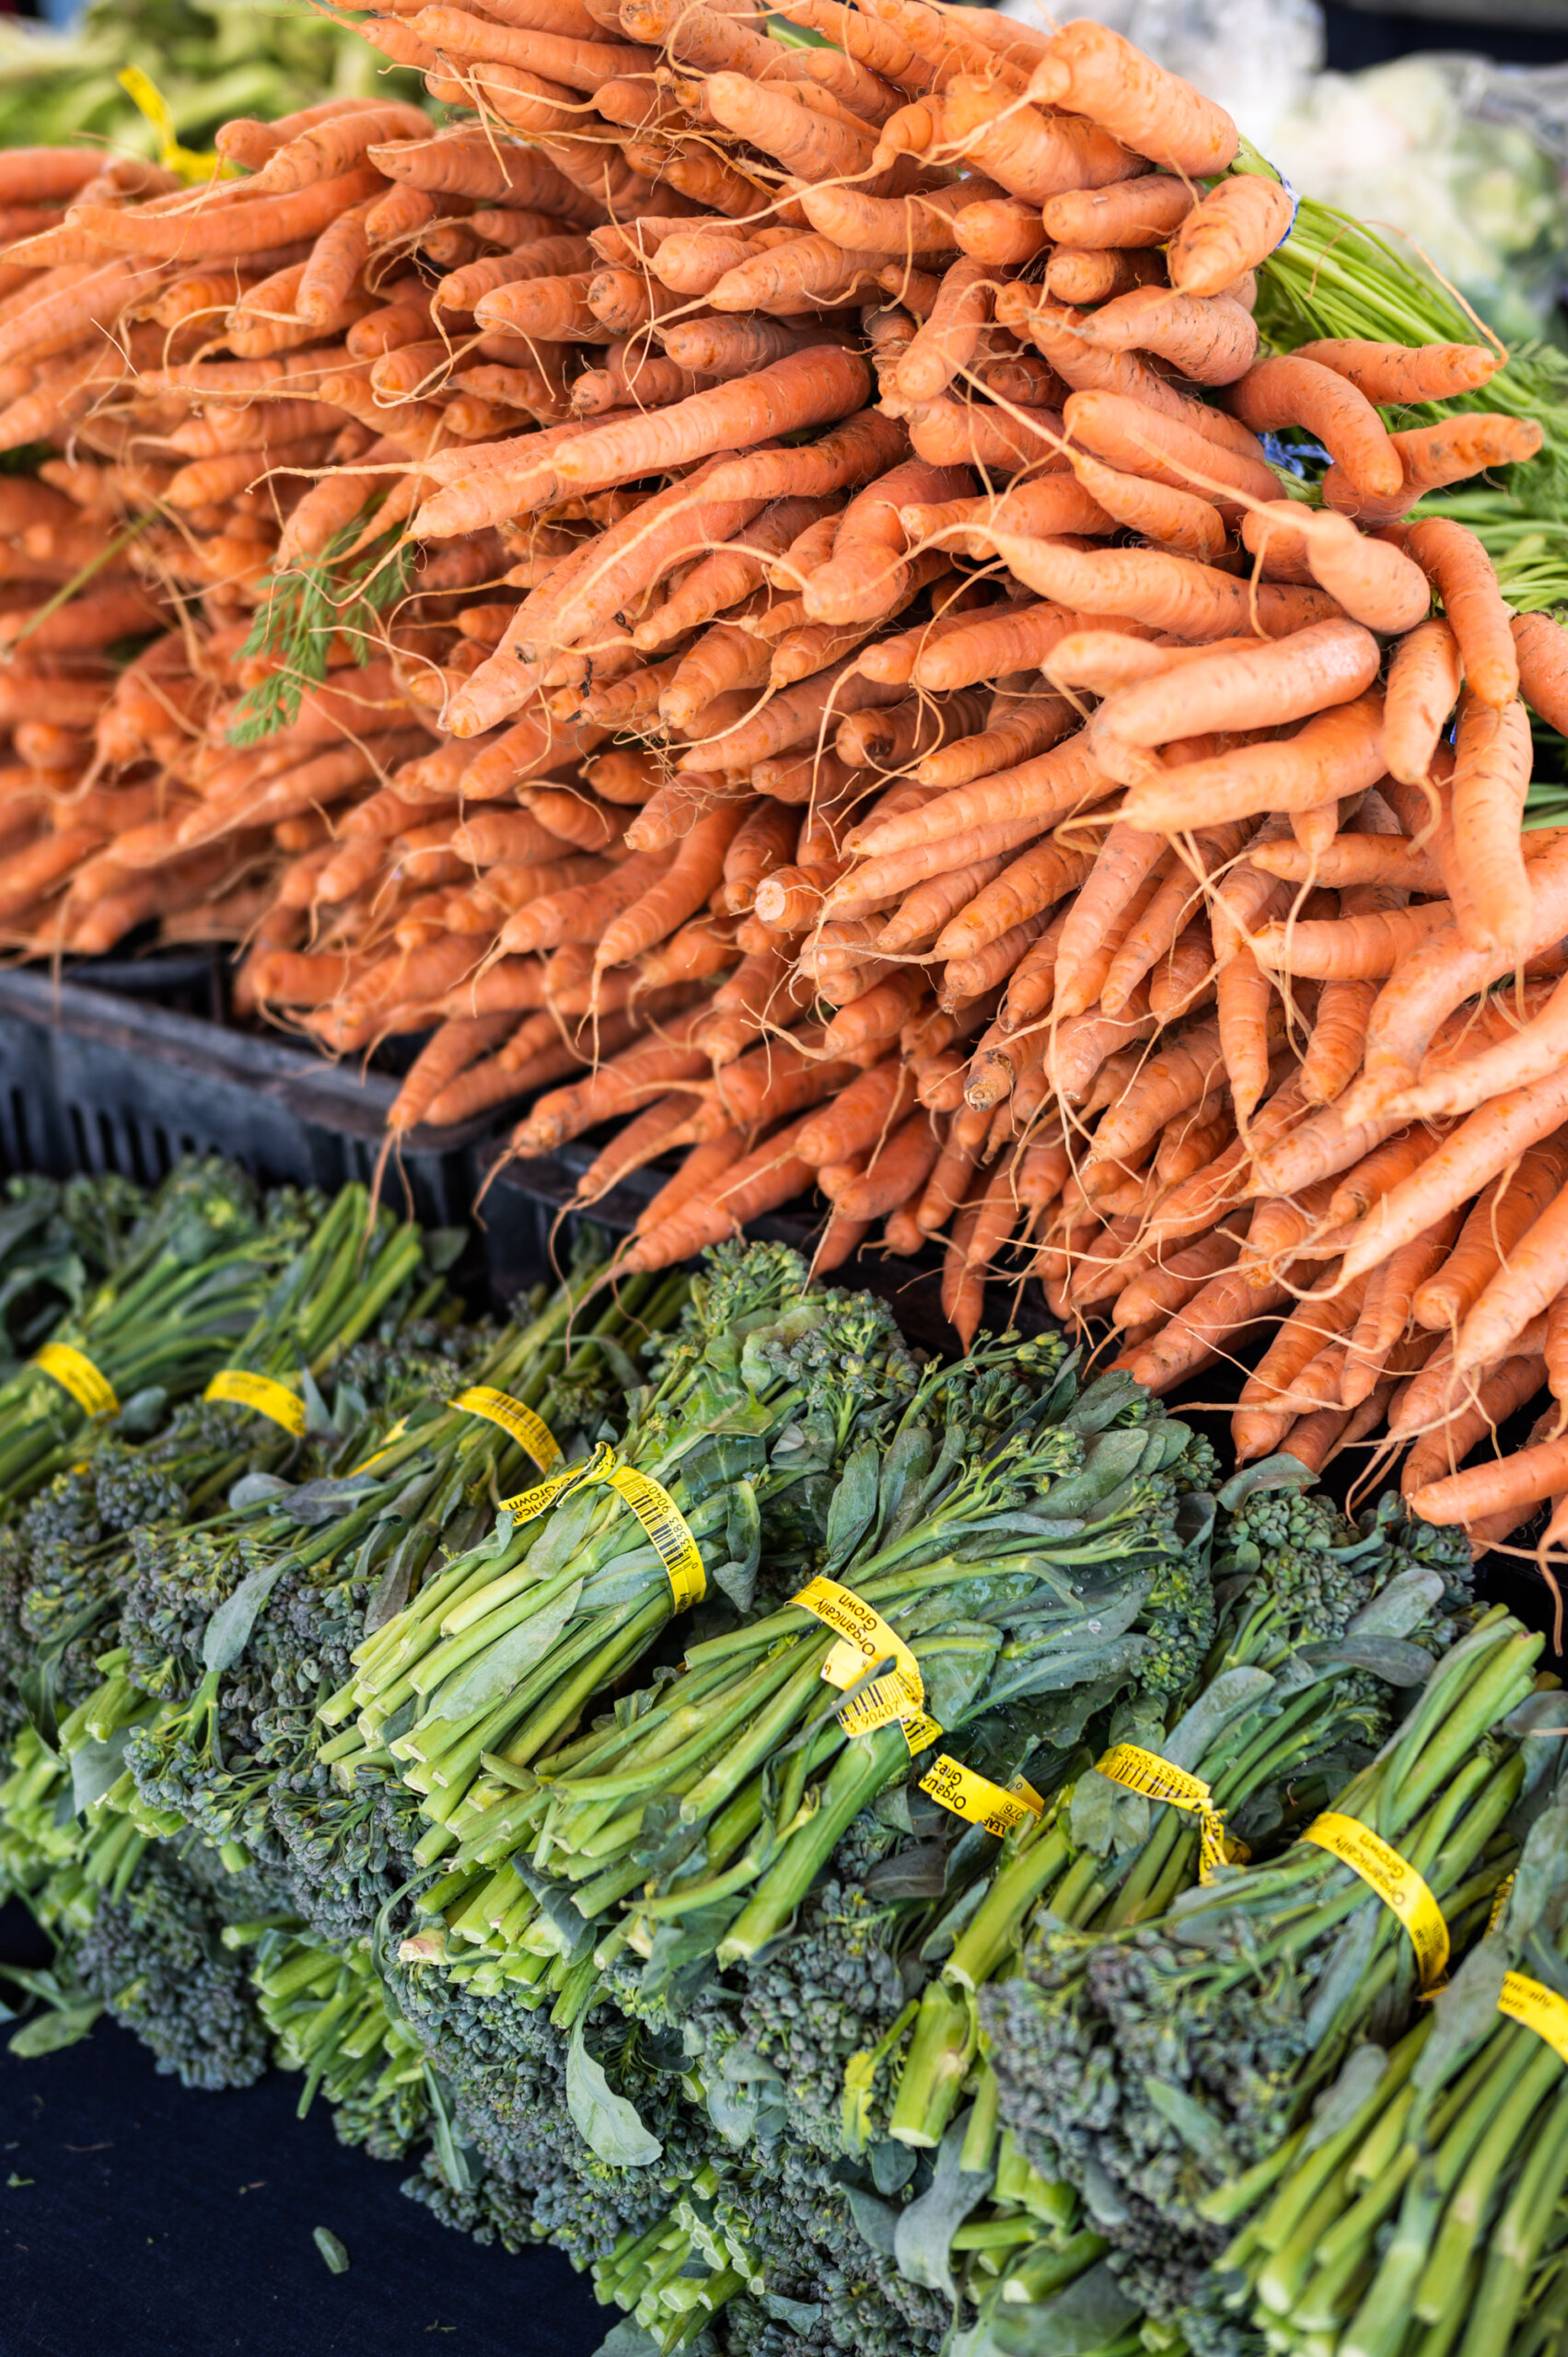 Farm-fresh carrots and broccoli rabe